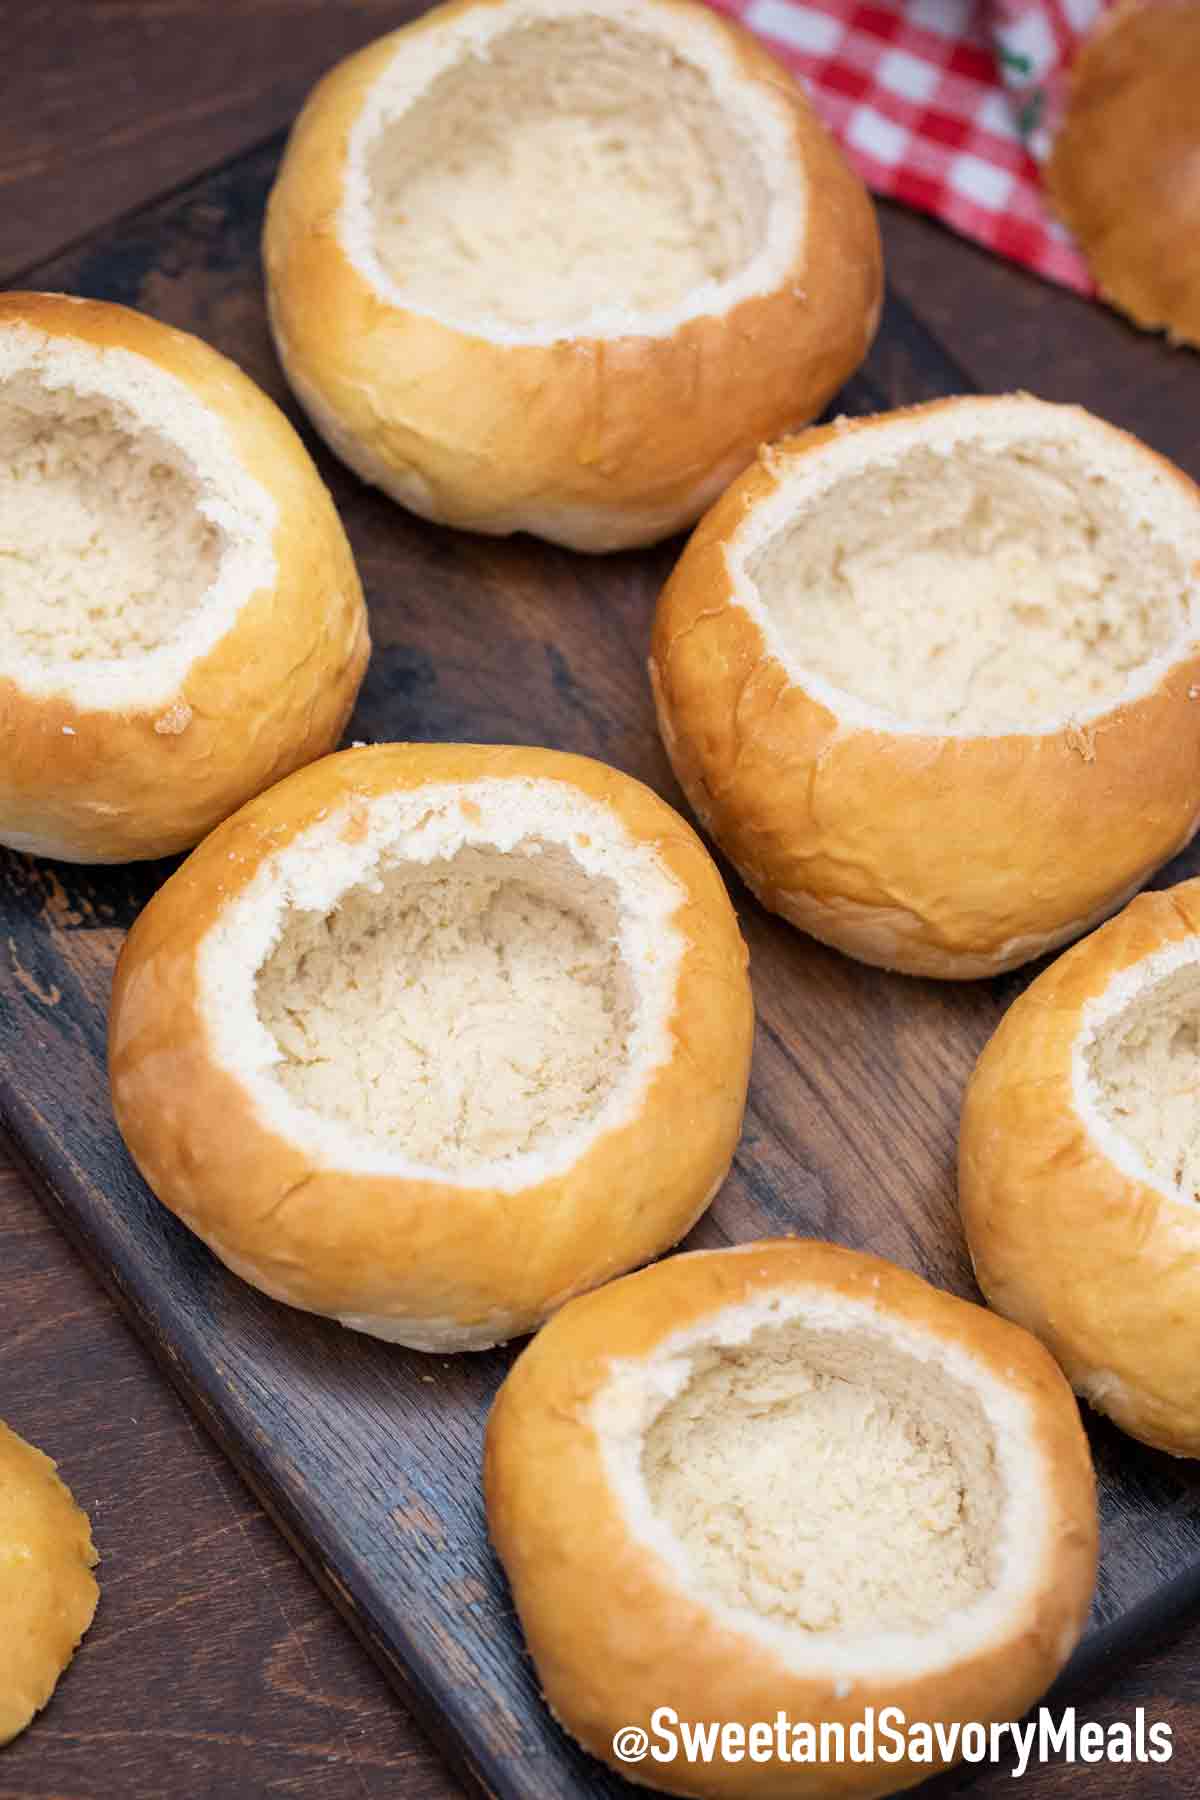 Homemade Bread Bowls - Recipe Girl